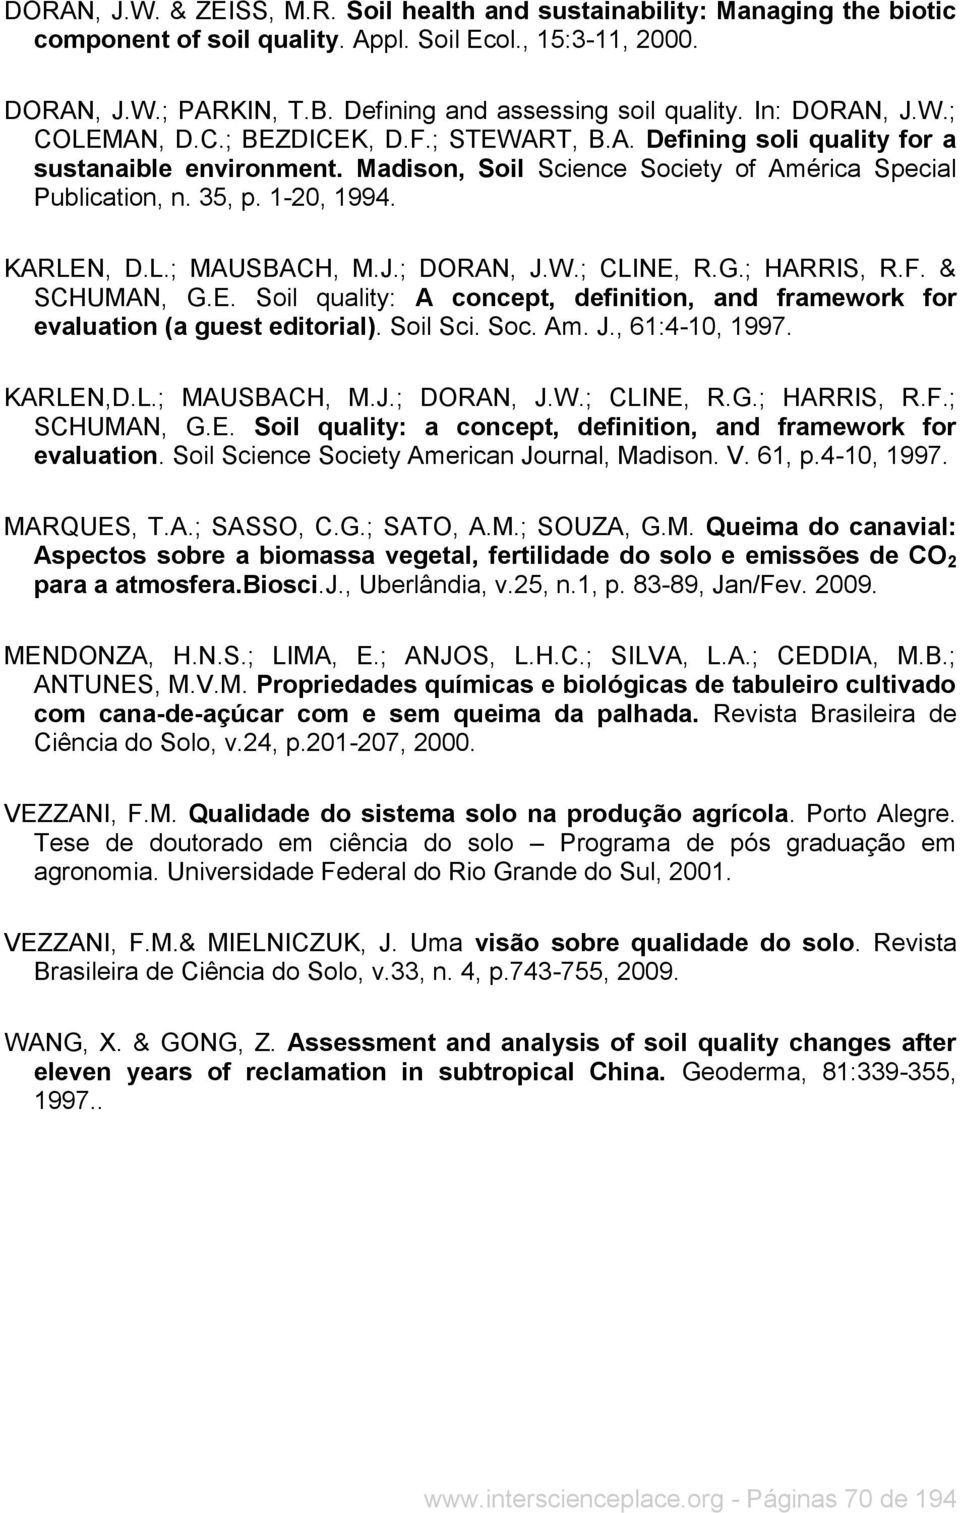 KARLEN, D.L.; MAUSBACH, M.J.; DORAN, J.W.; CLINE, R.G.; HARRIS, R.F. & SCHUMAN, G.E. Soil quality: A concept, definition, and framework for evaluation (a guest editorial). Soil Sci. Soc. Am. J., 61:4-10, 1997.